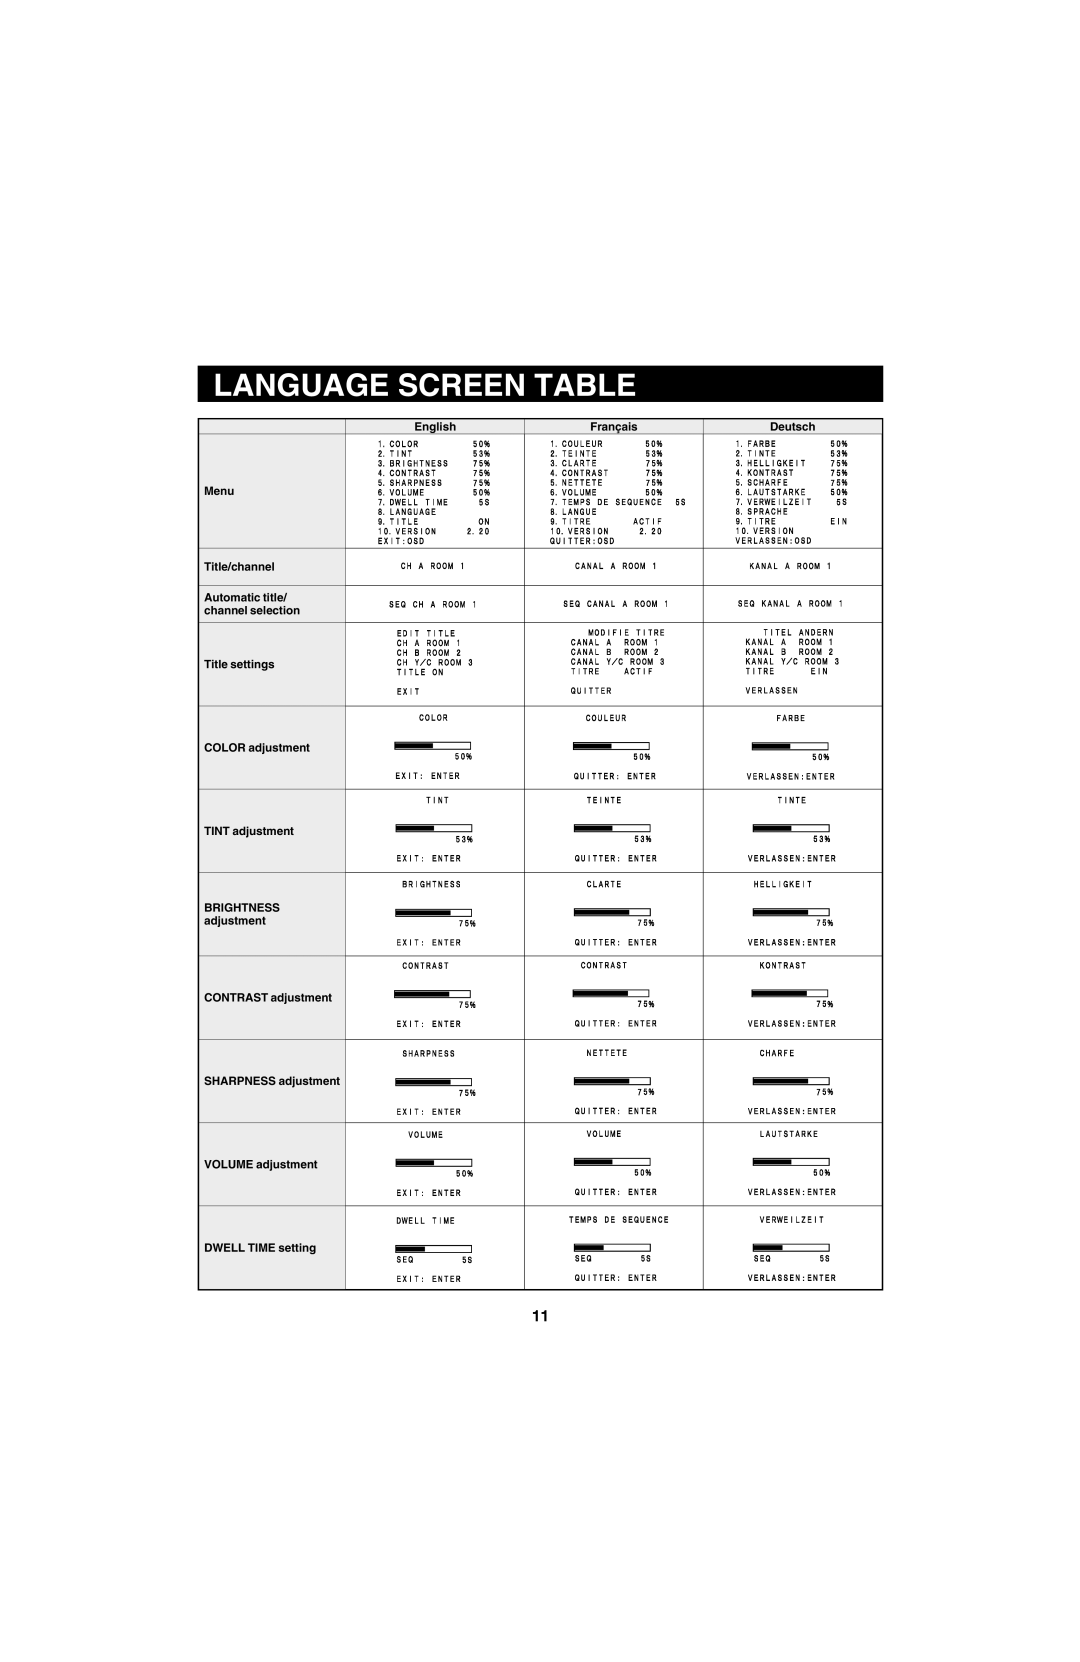 Sanyo VMC-8613 Language Screen Table, English, Français, Deutsch, COLOR adjustment TINT adjustment BRIGHTNESS adjustment 